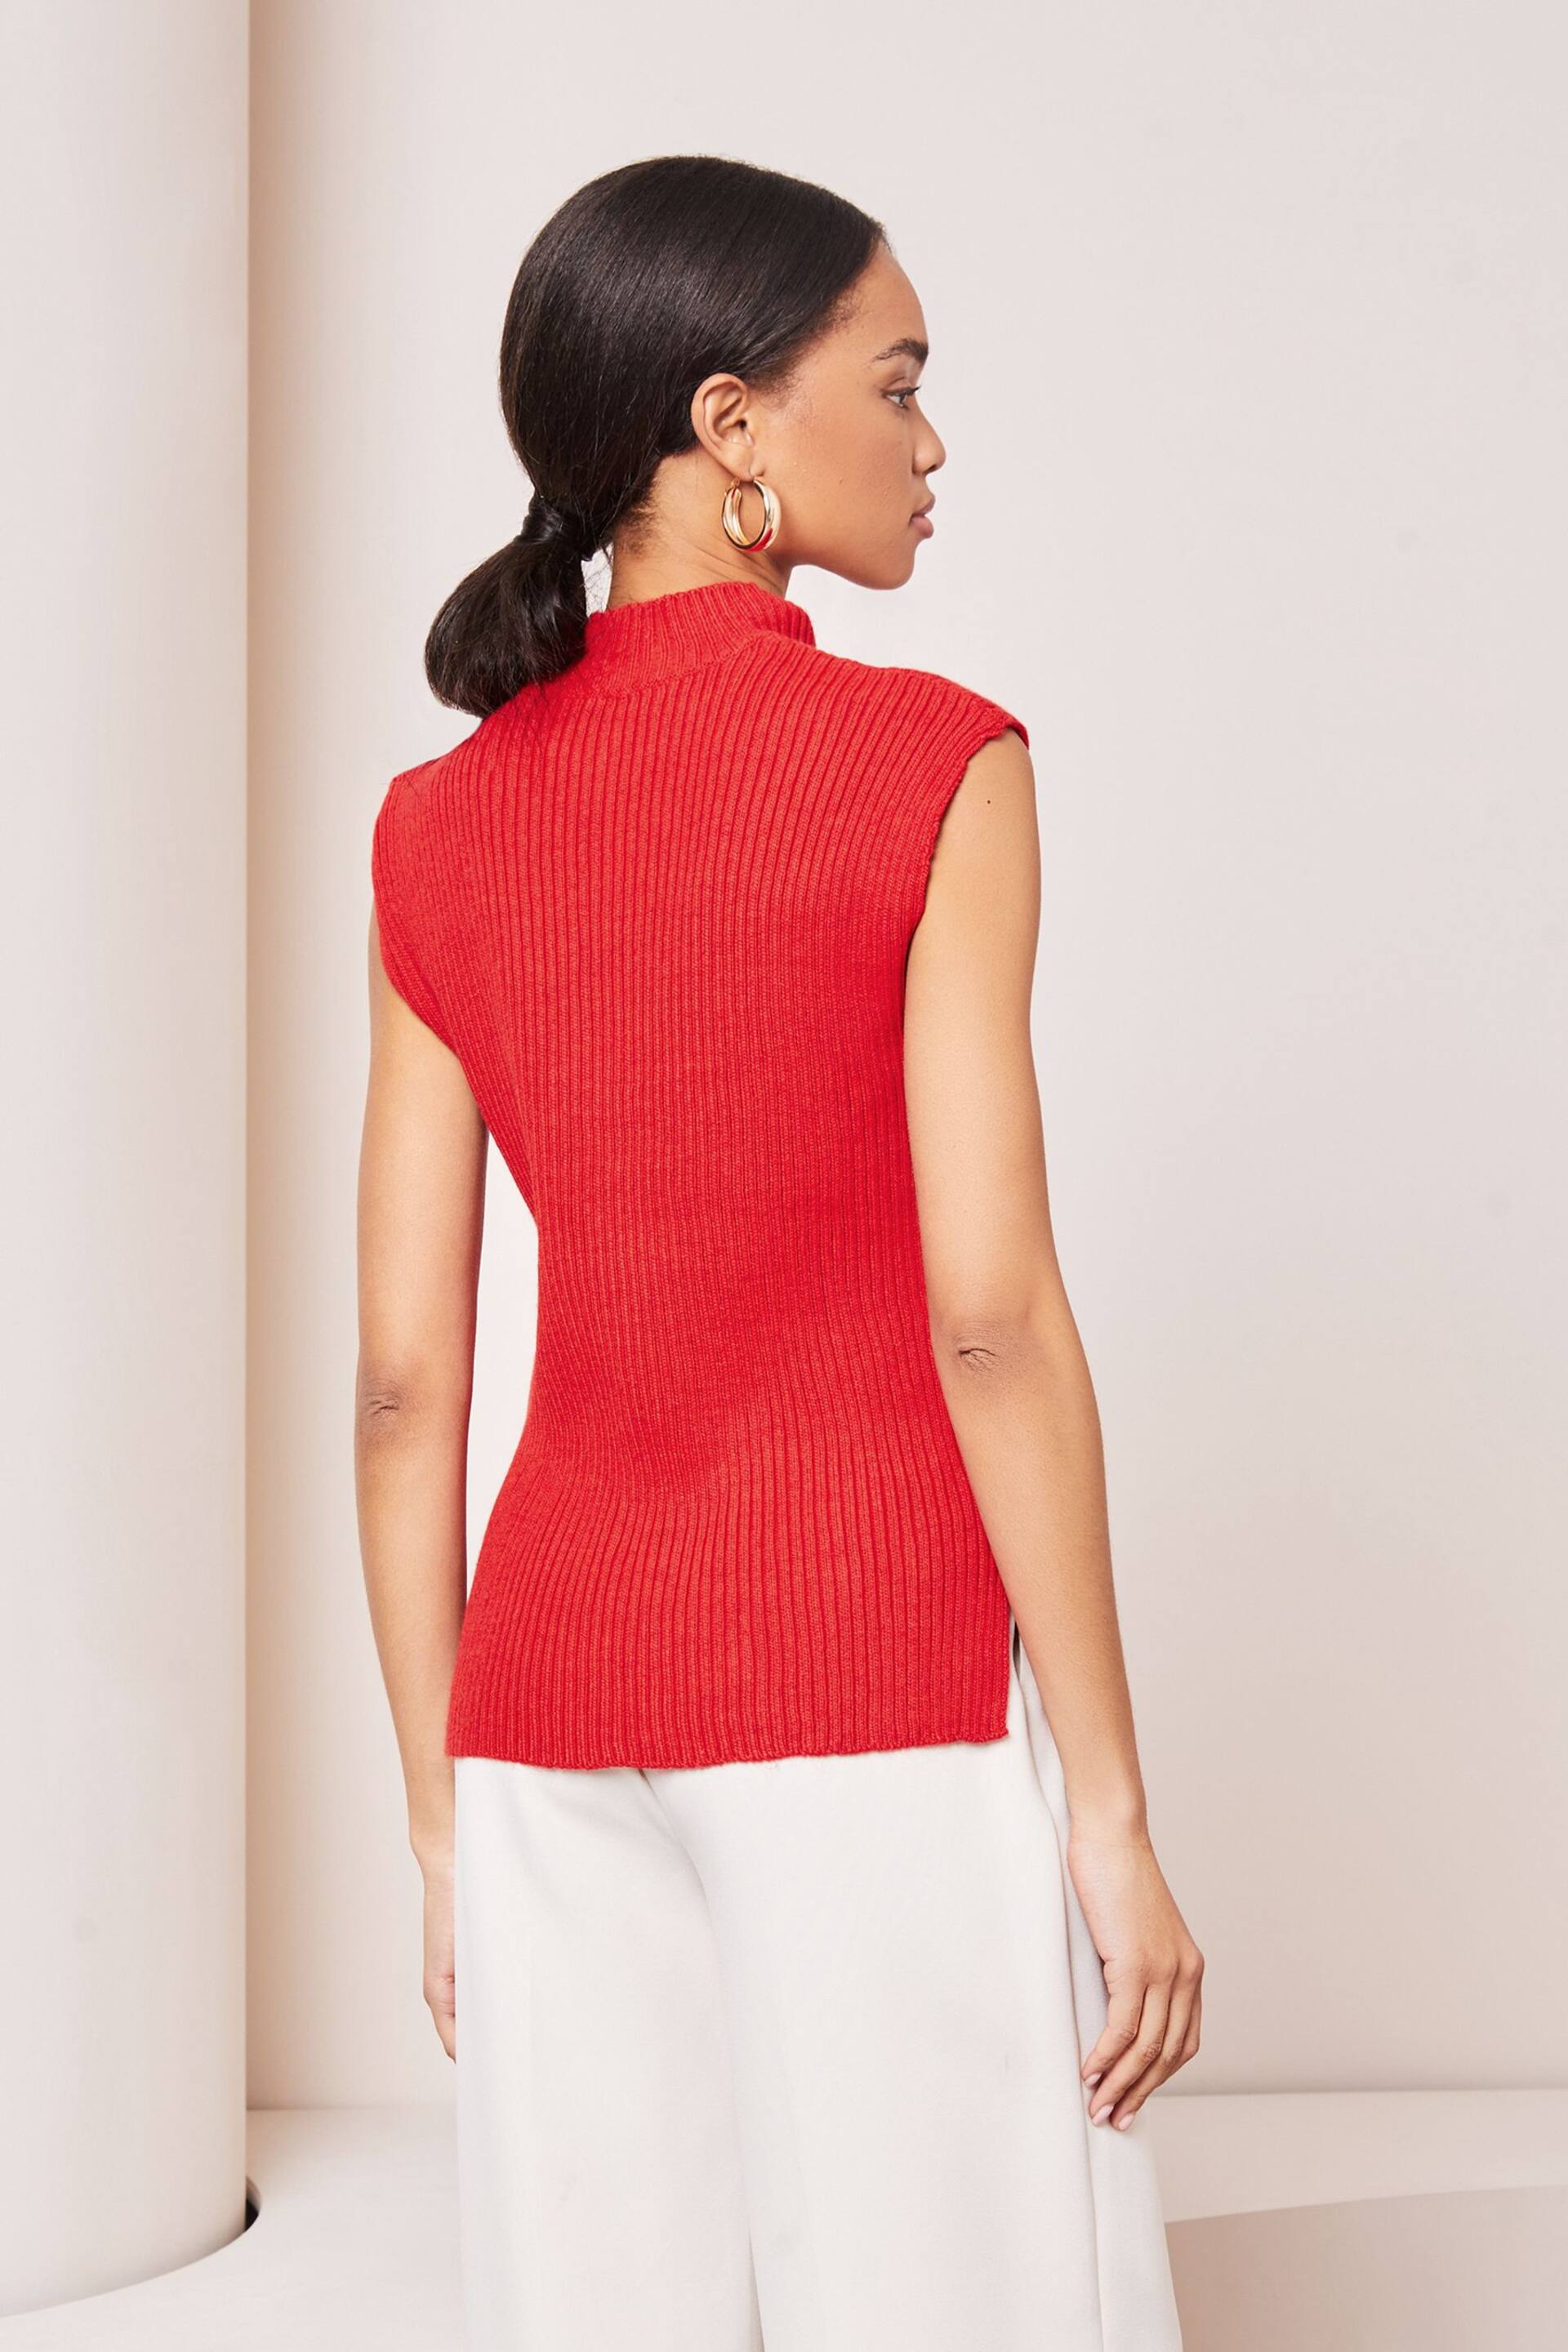 Lipsy Red Soft Knit Ribbed Tabbard Vest - Image 2 of 4